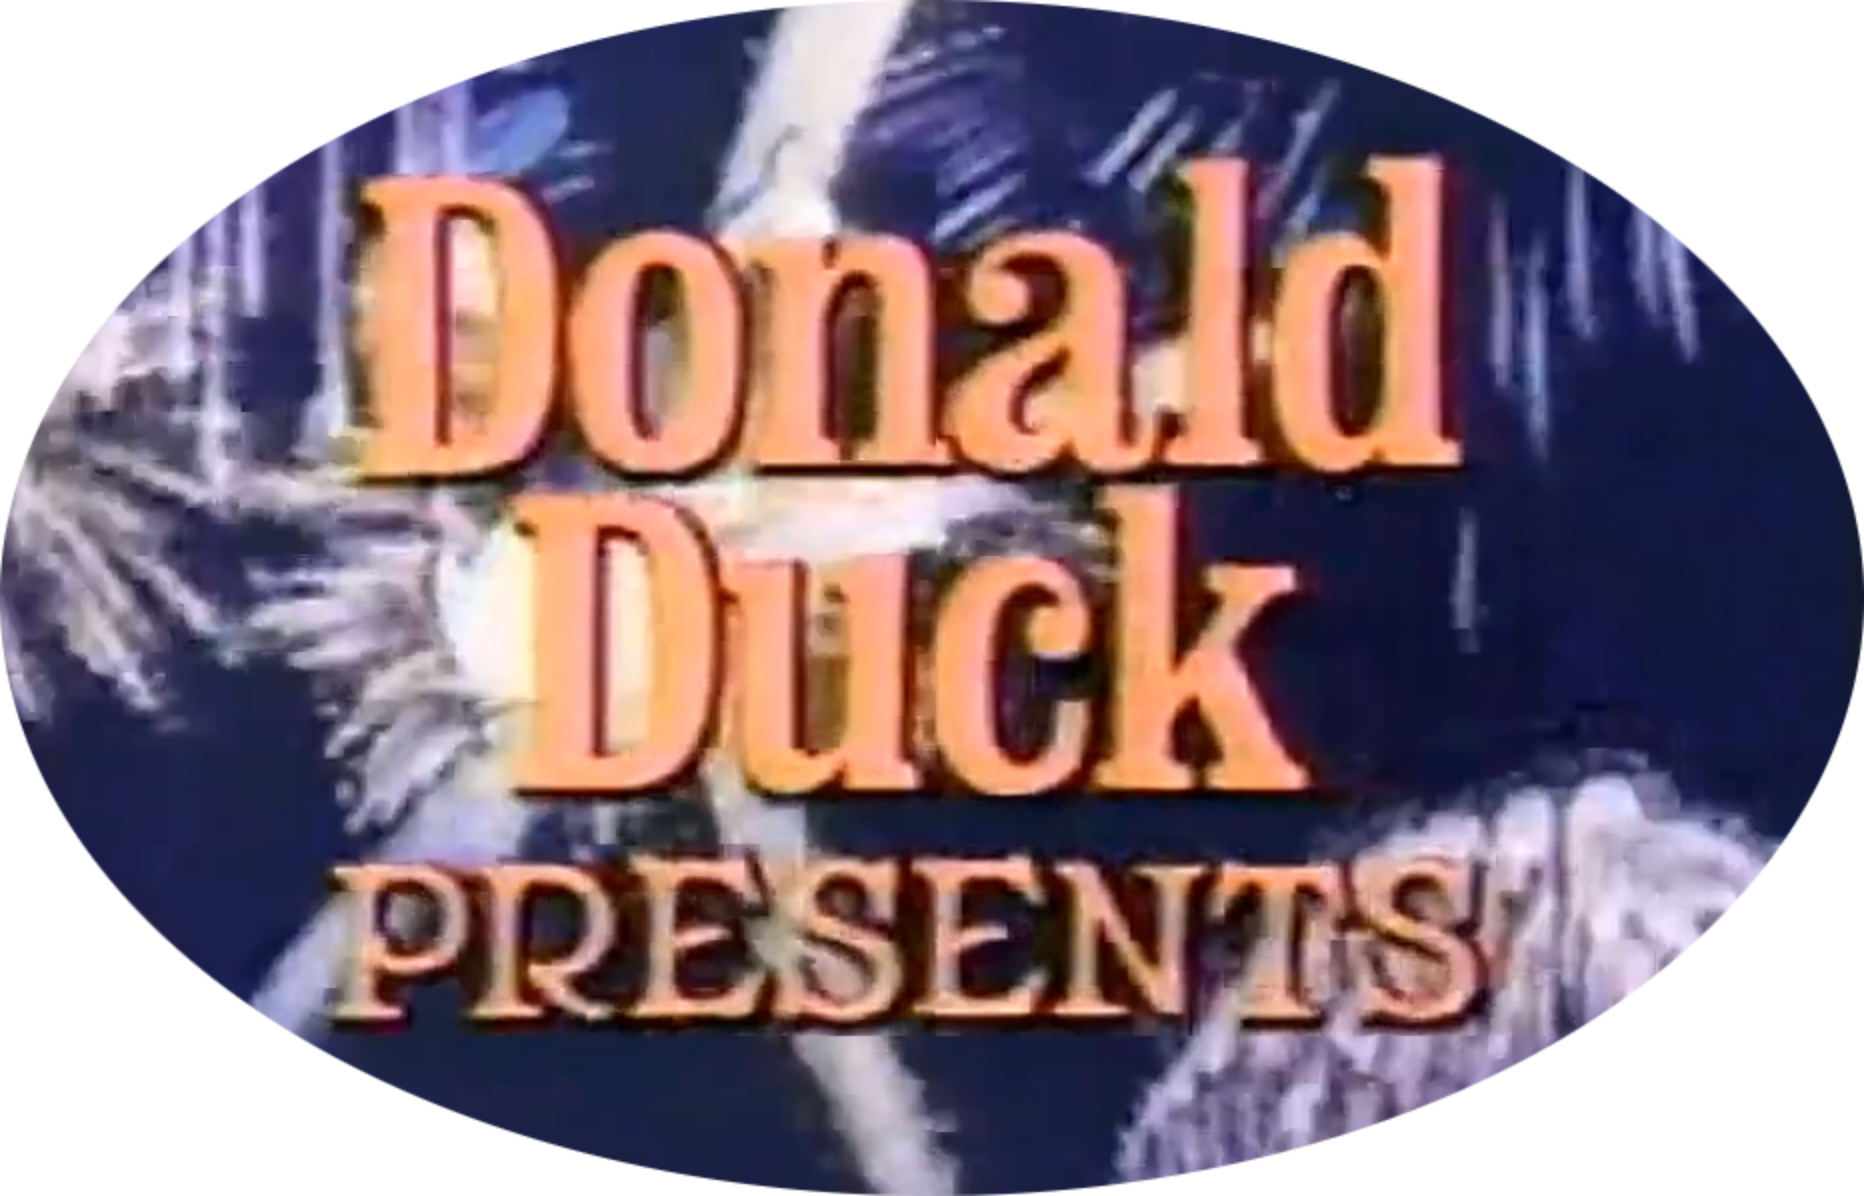 Donald Duck Presents 